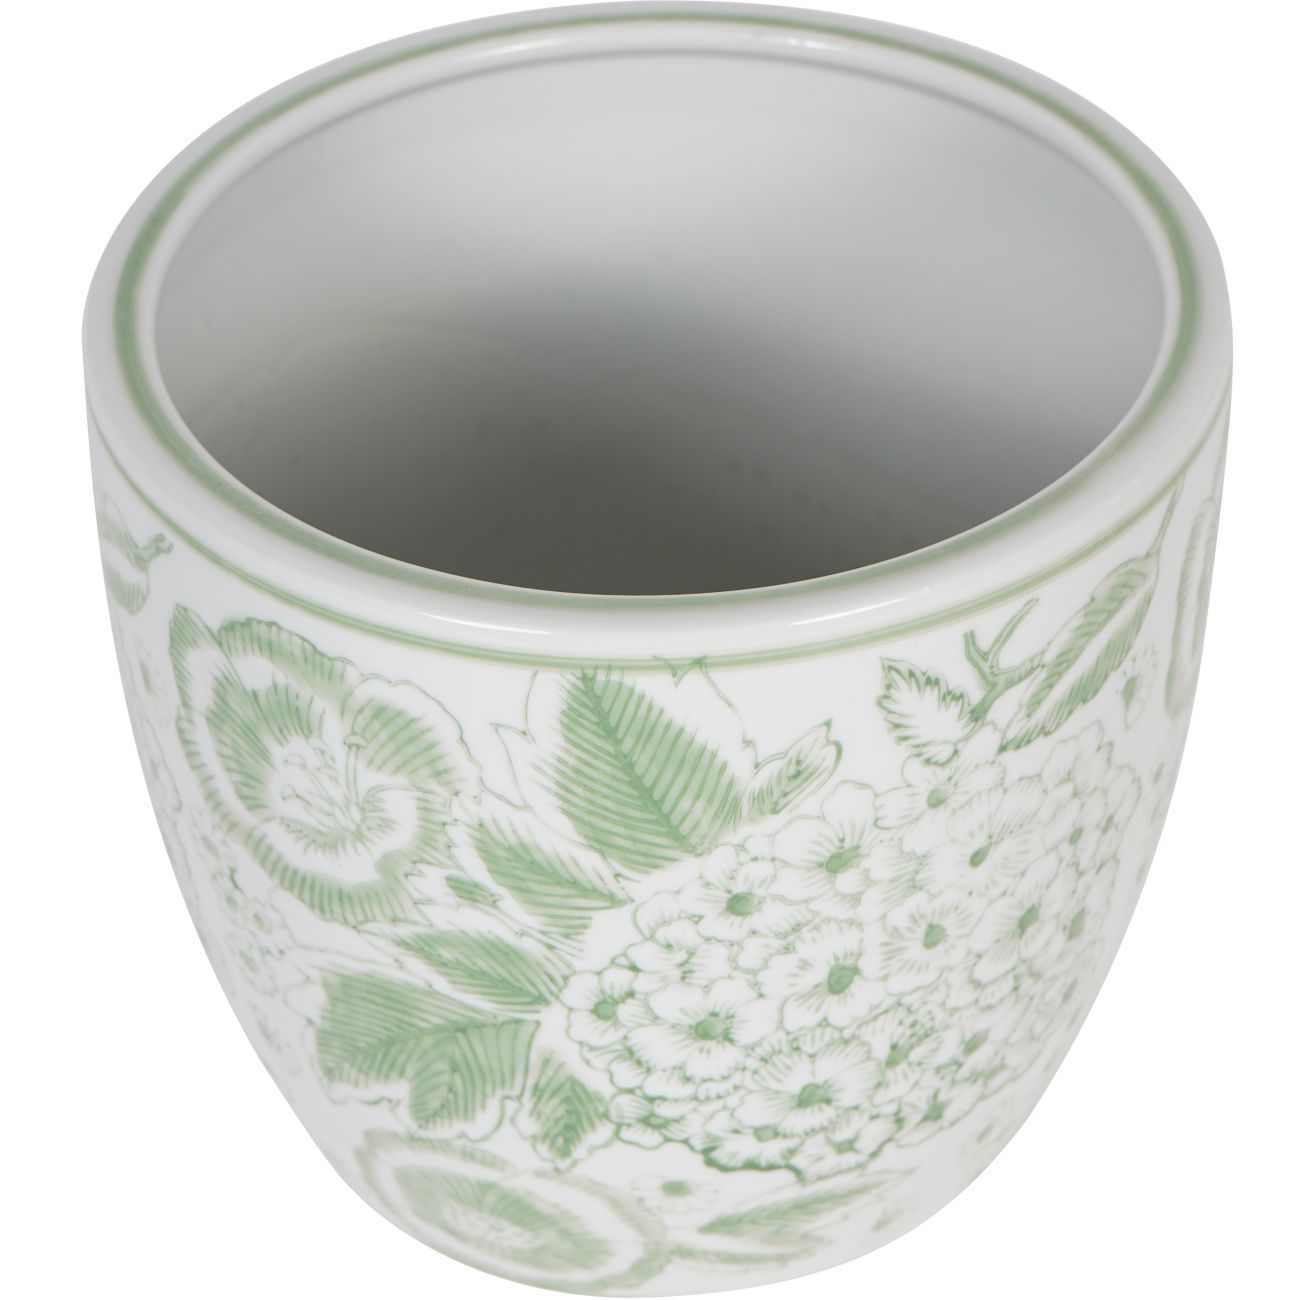 Laura Ashley Green Porcelain Planter Medium